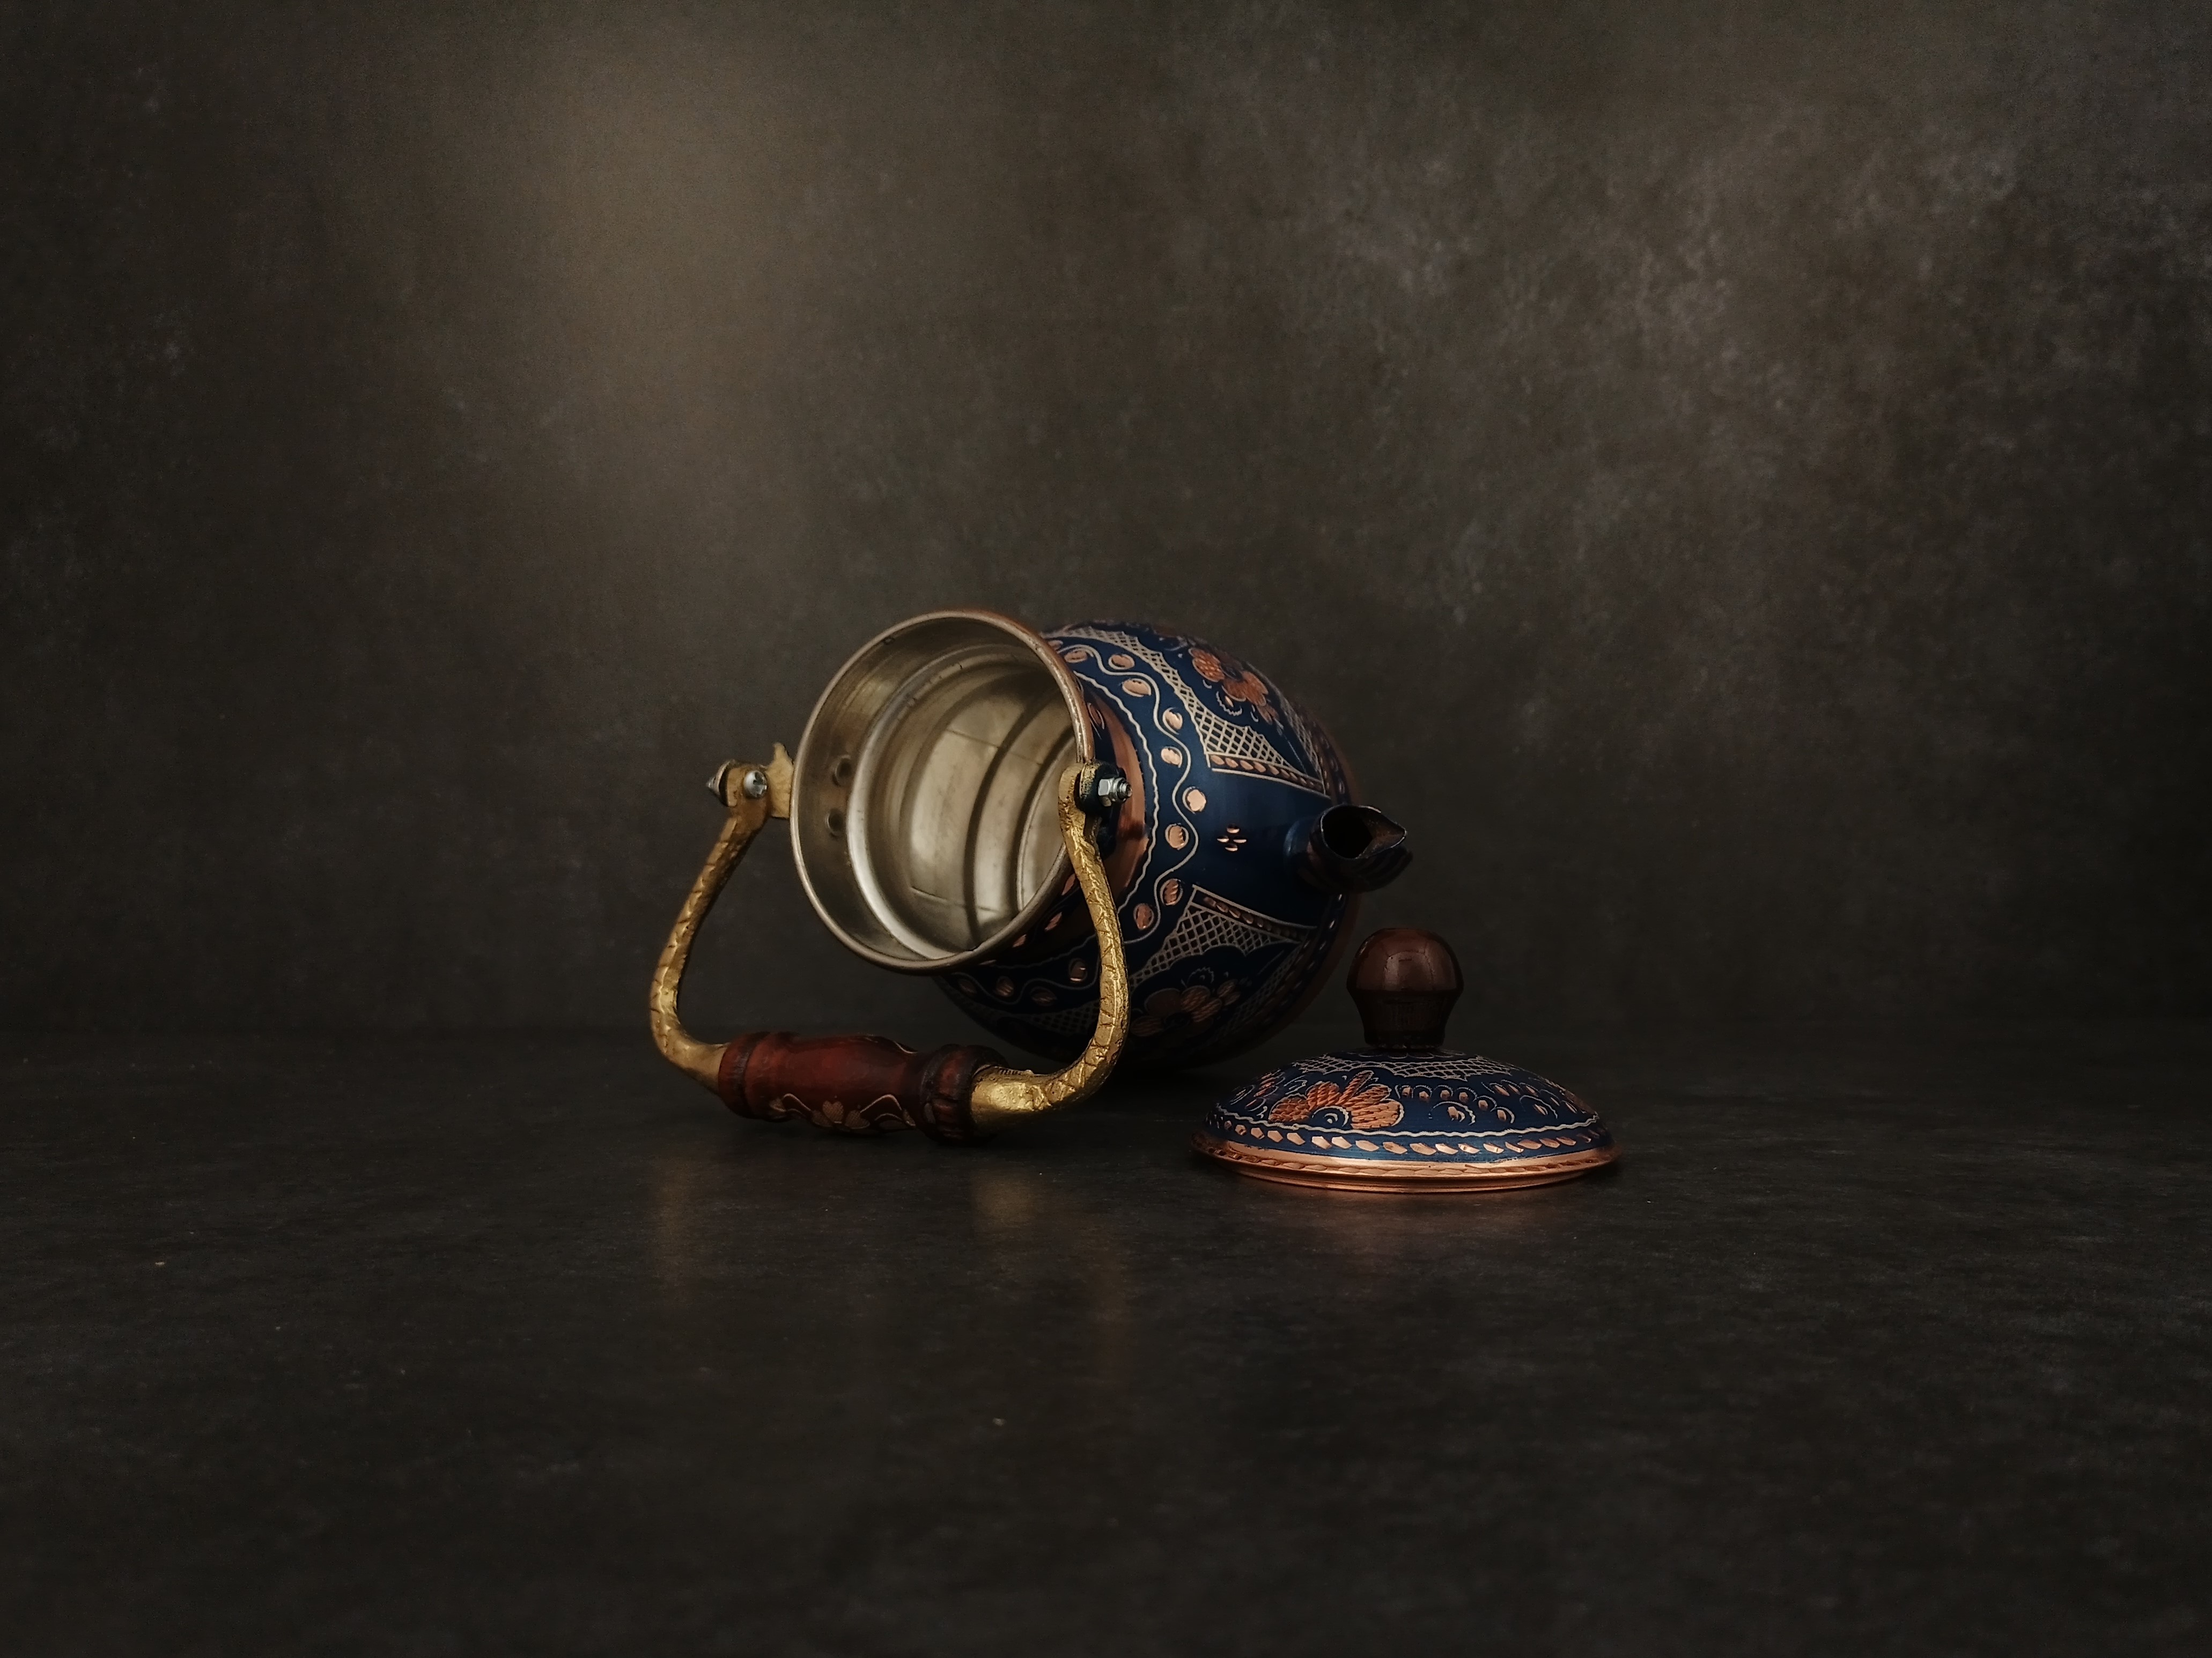 Turkish Handmade Tea Kettle, Engraved Solid Copper Tea Pot, Tea Kettle Stovetop